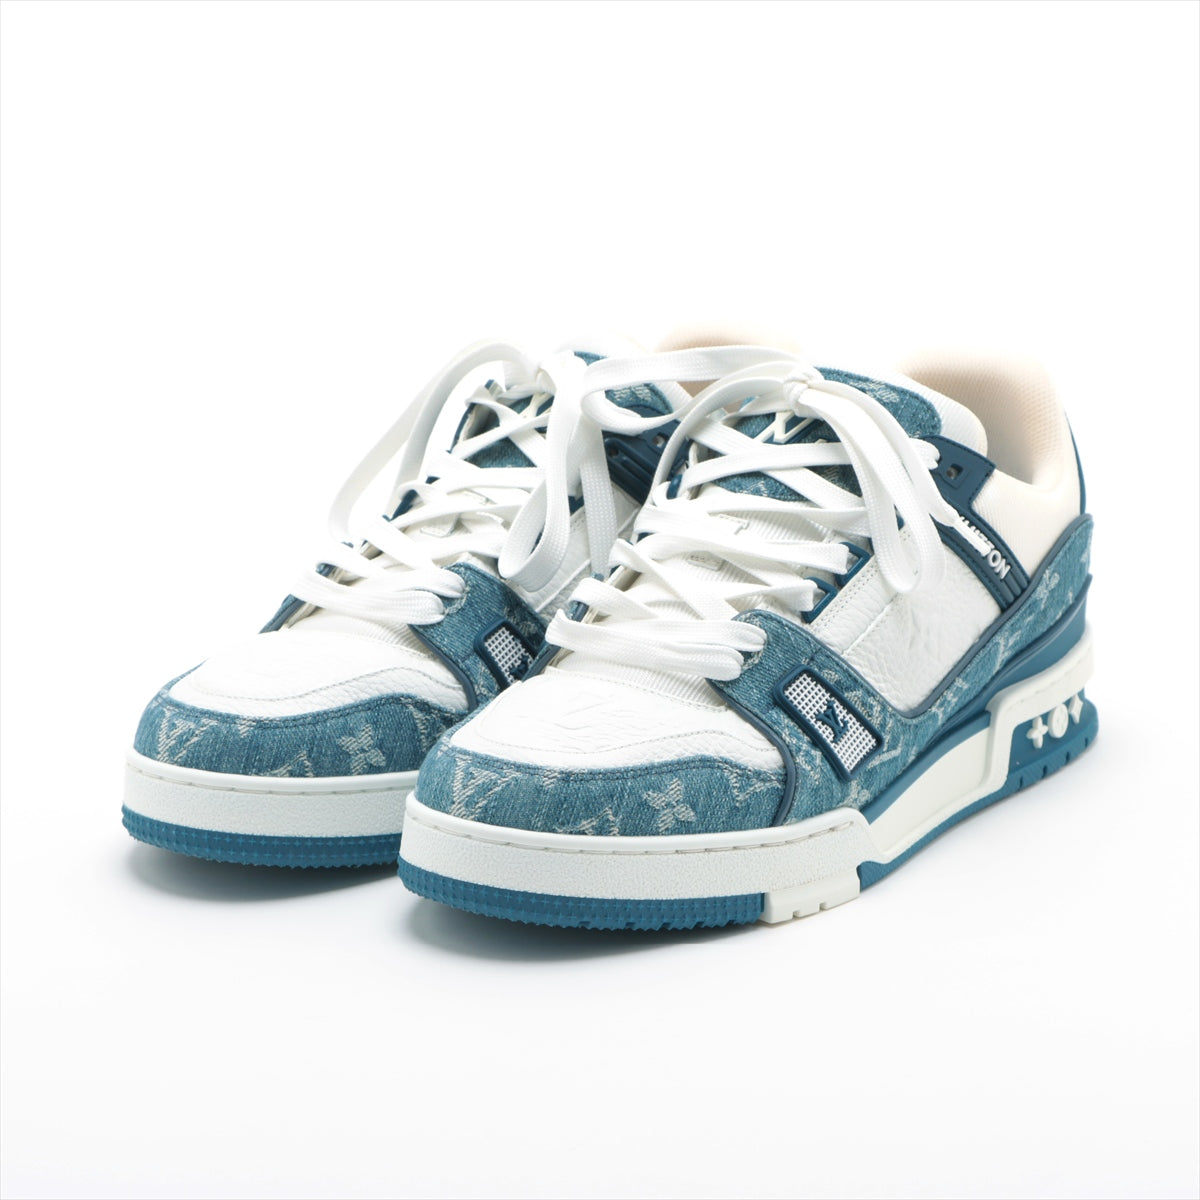 Louis Vuitton LV Trainer Line 21 years Denim & leather Sneakers 7 Men's Blue x white FD0291 Monogram